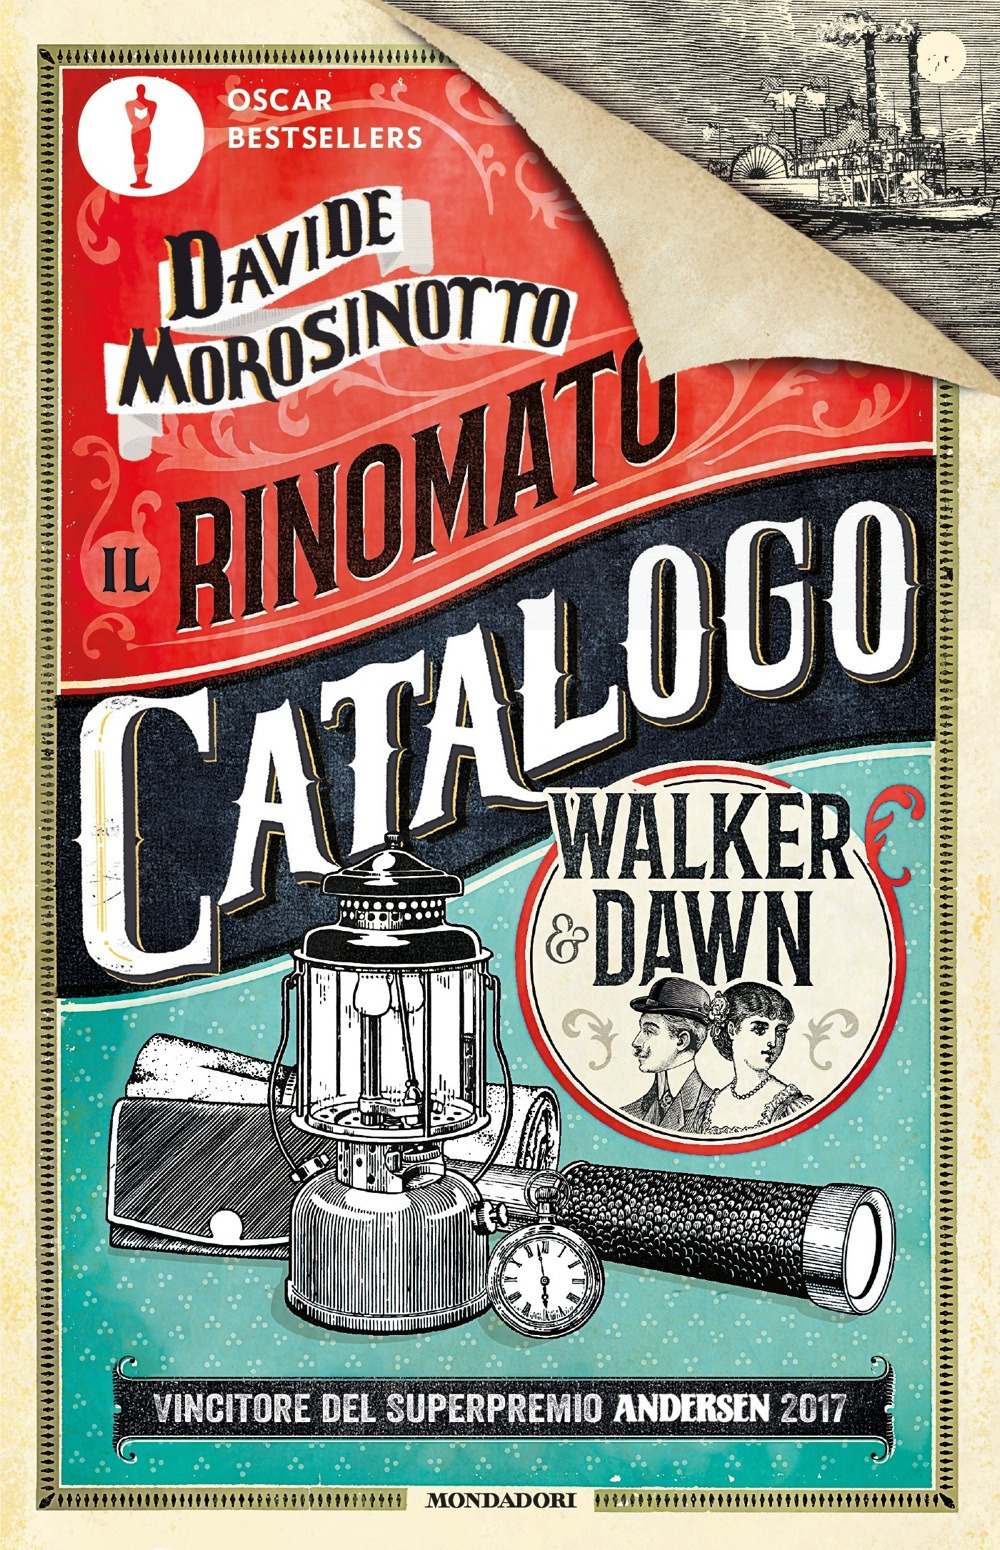 Il rinomato catalogo Walker & Dawn - Davide Morosinotto - Mondadori